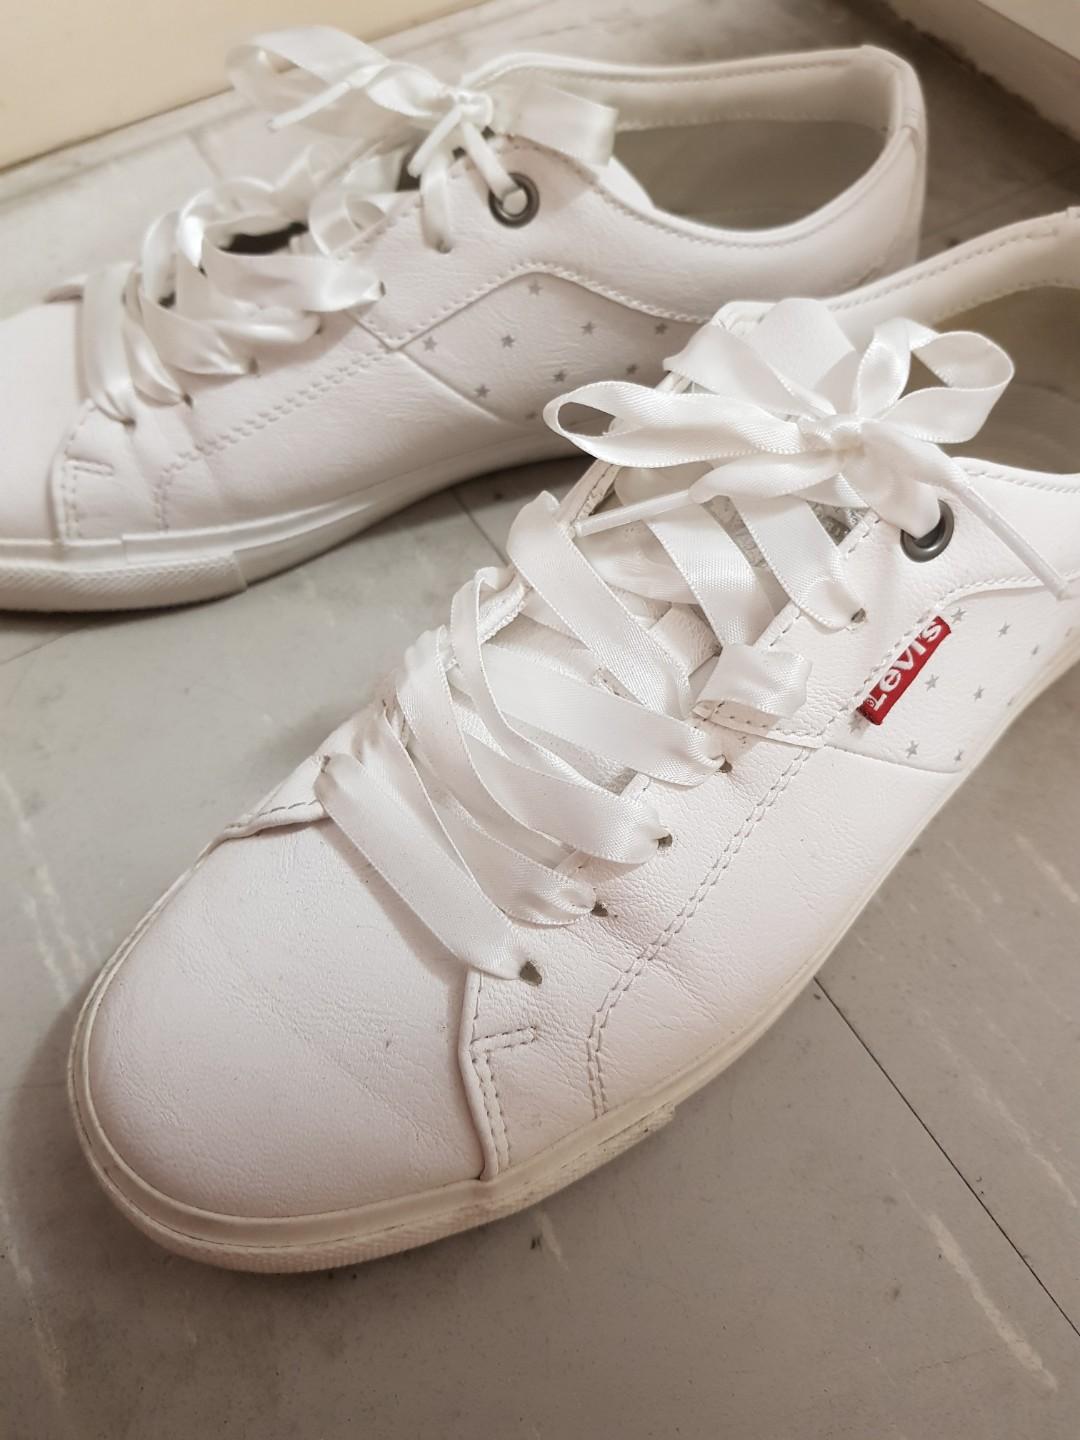 levi's shoes white price